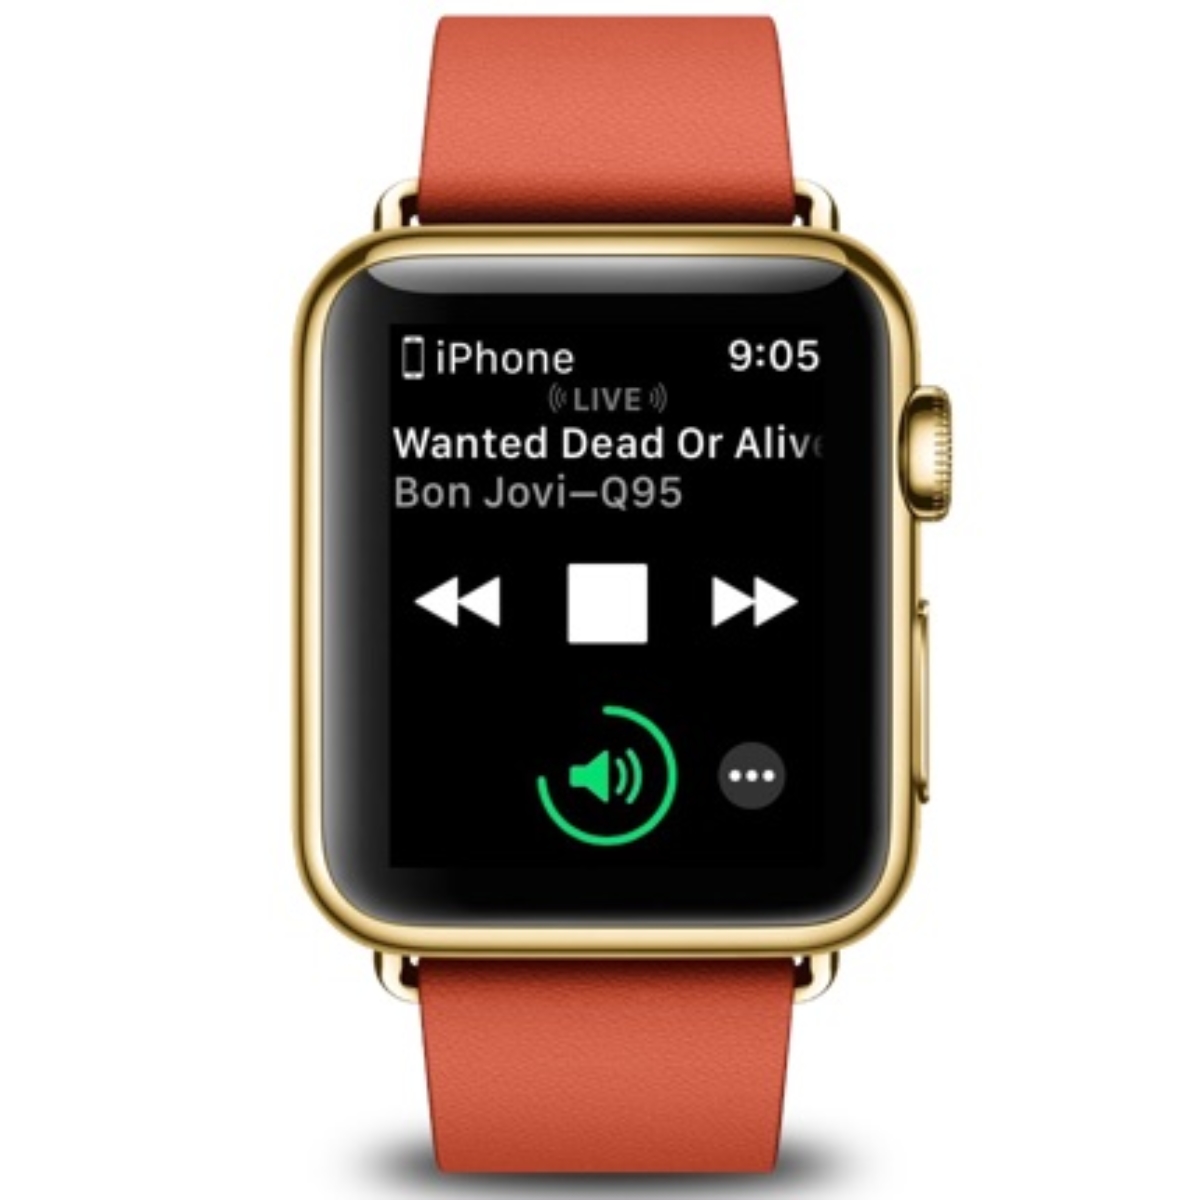 music controls on apple watch